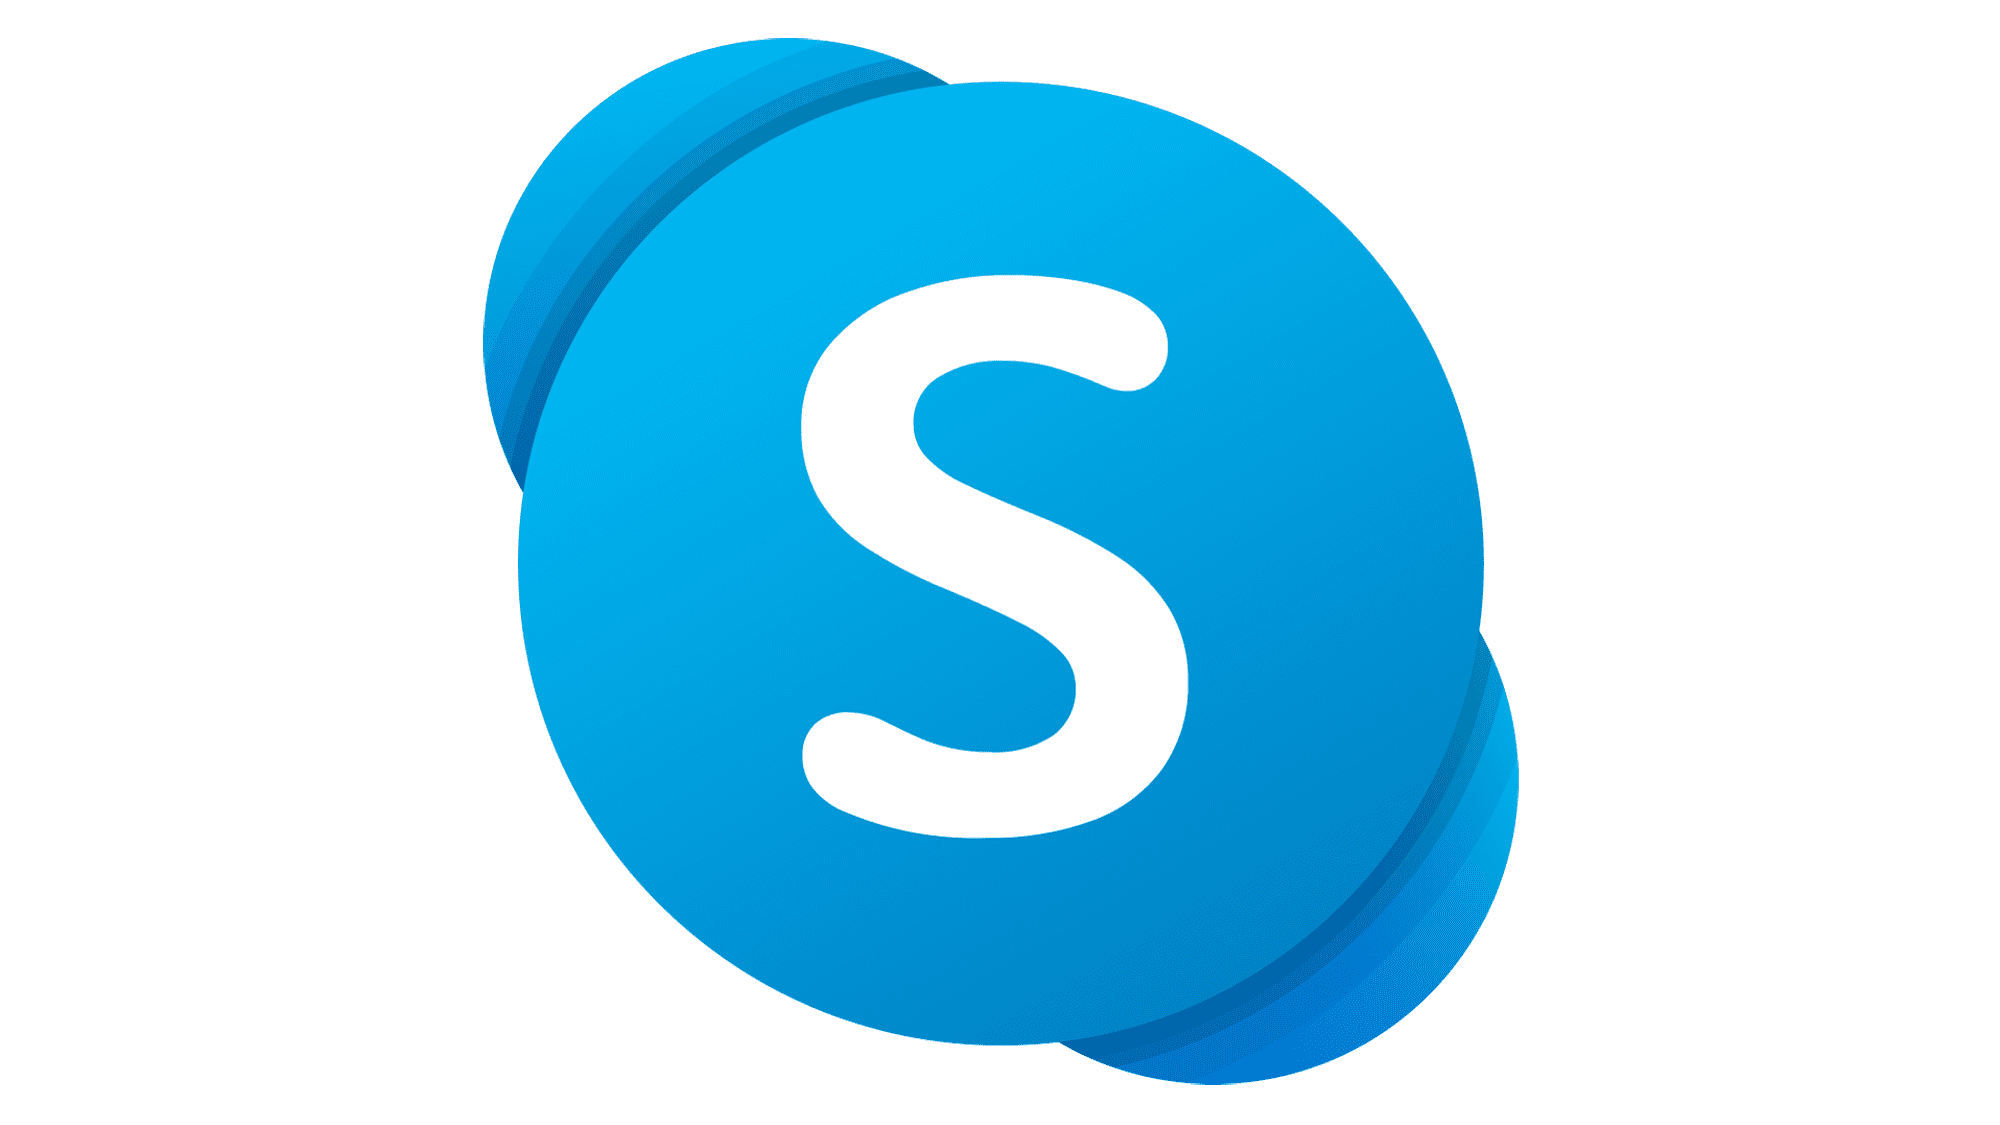 Logo-Skype